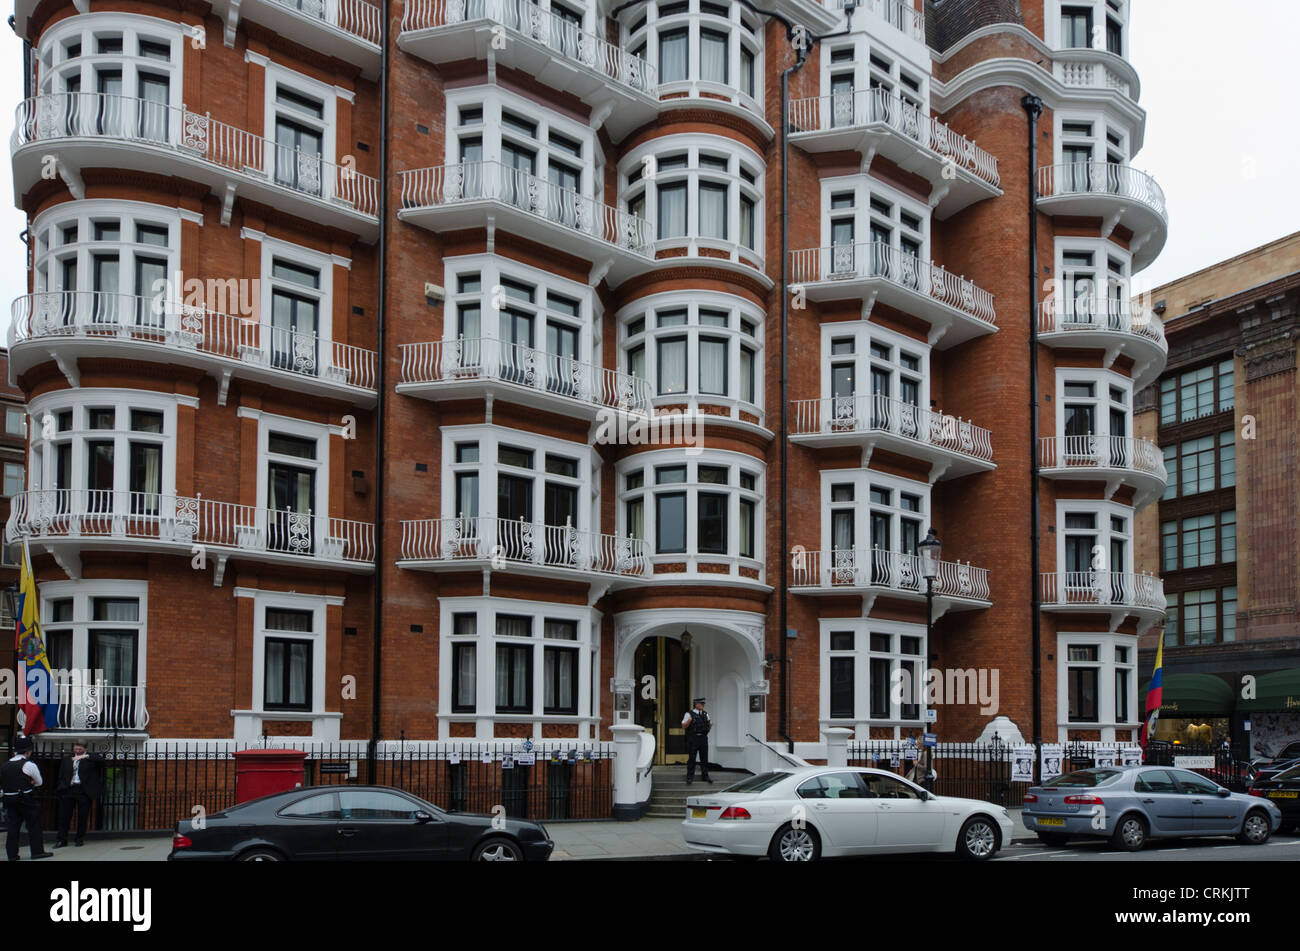 Ecuador Embassy where Julian Assange has sort asylum because of Wikileaks Hans Place Westminster London Uk Stock Photo